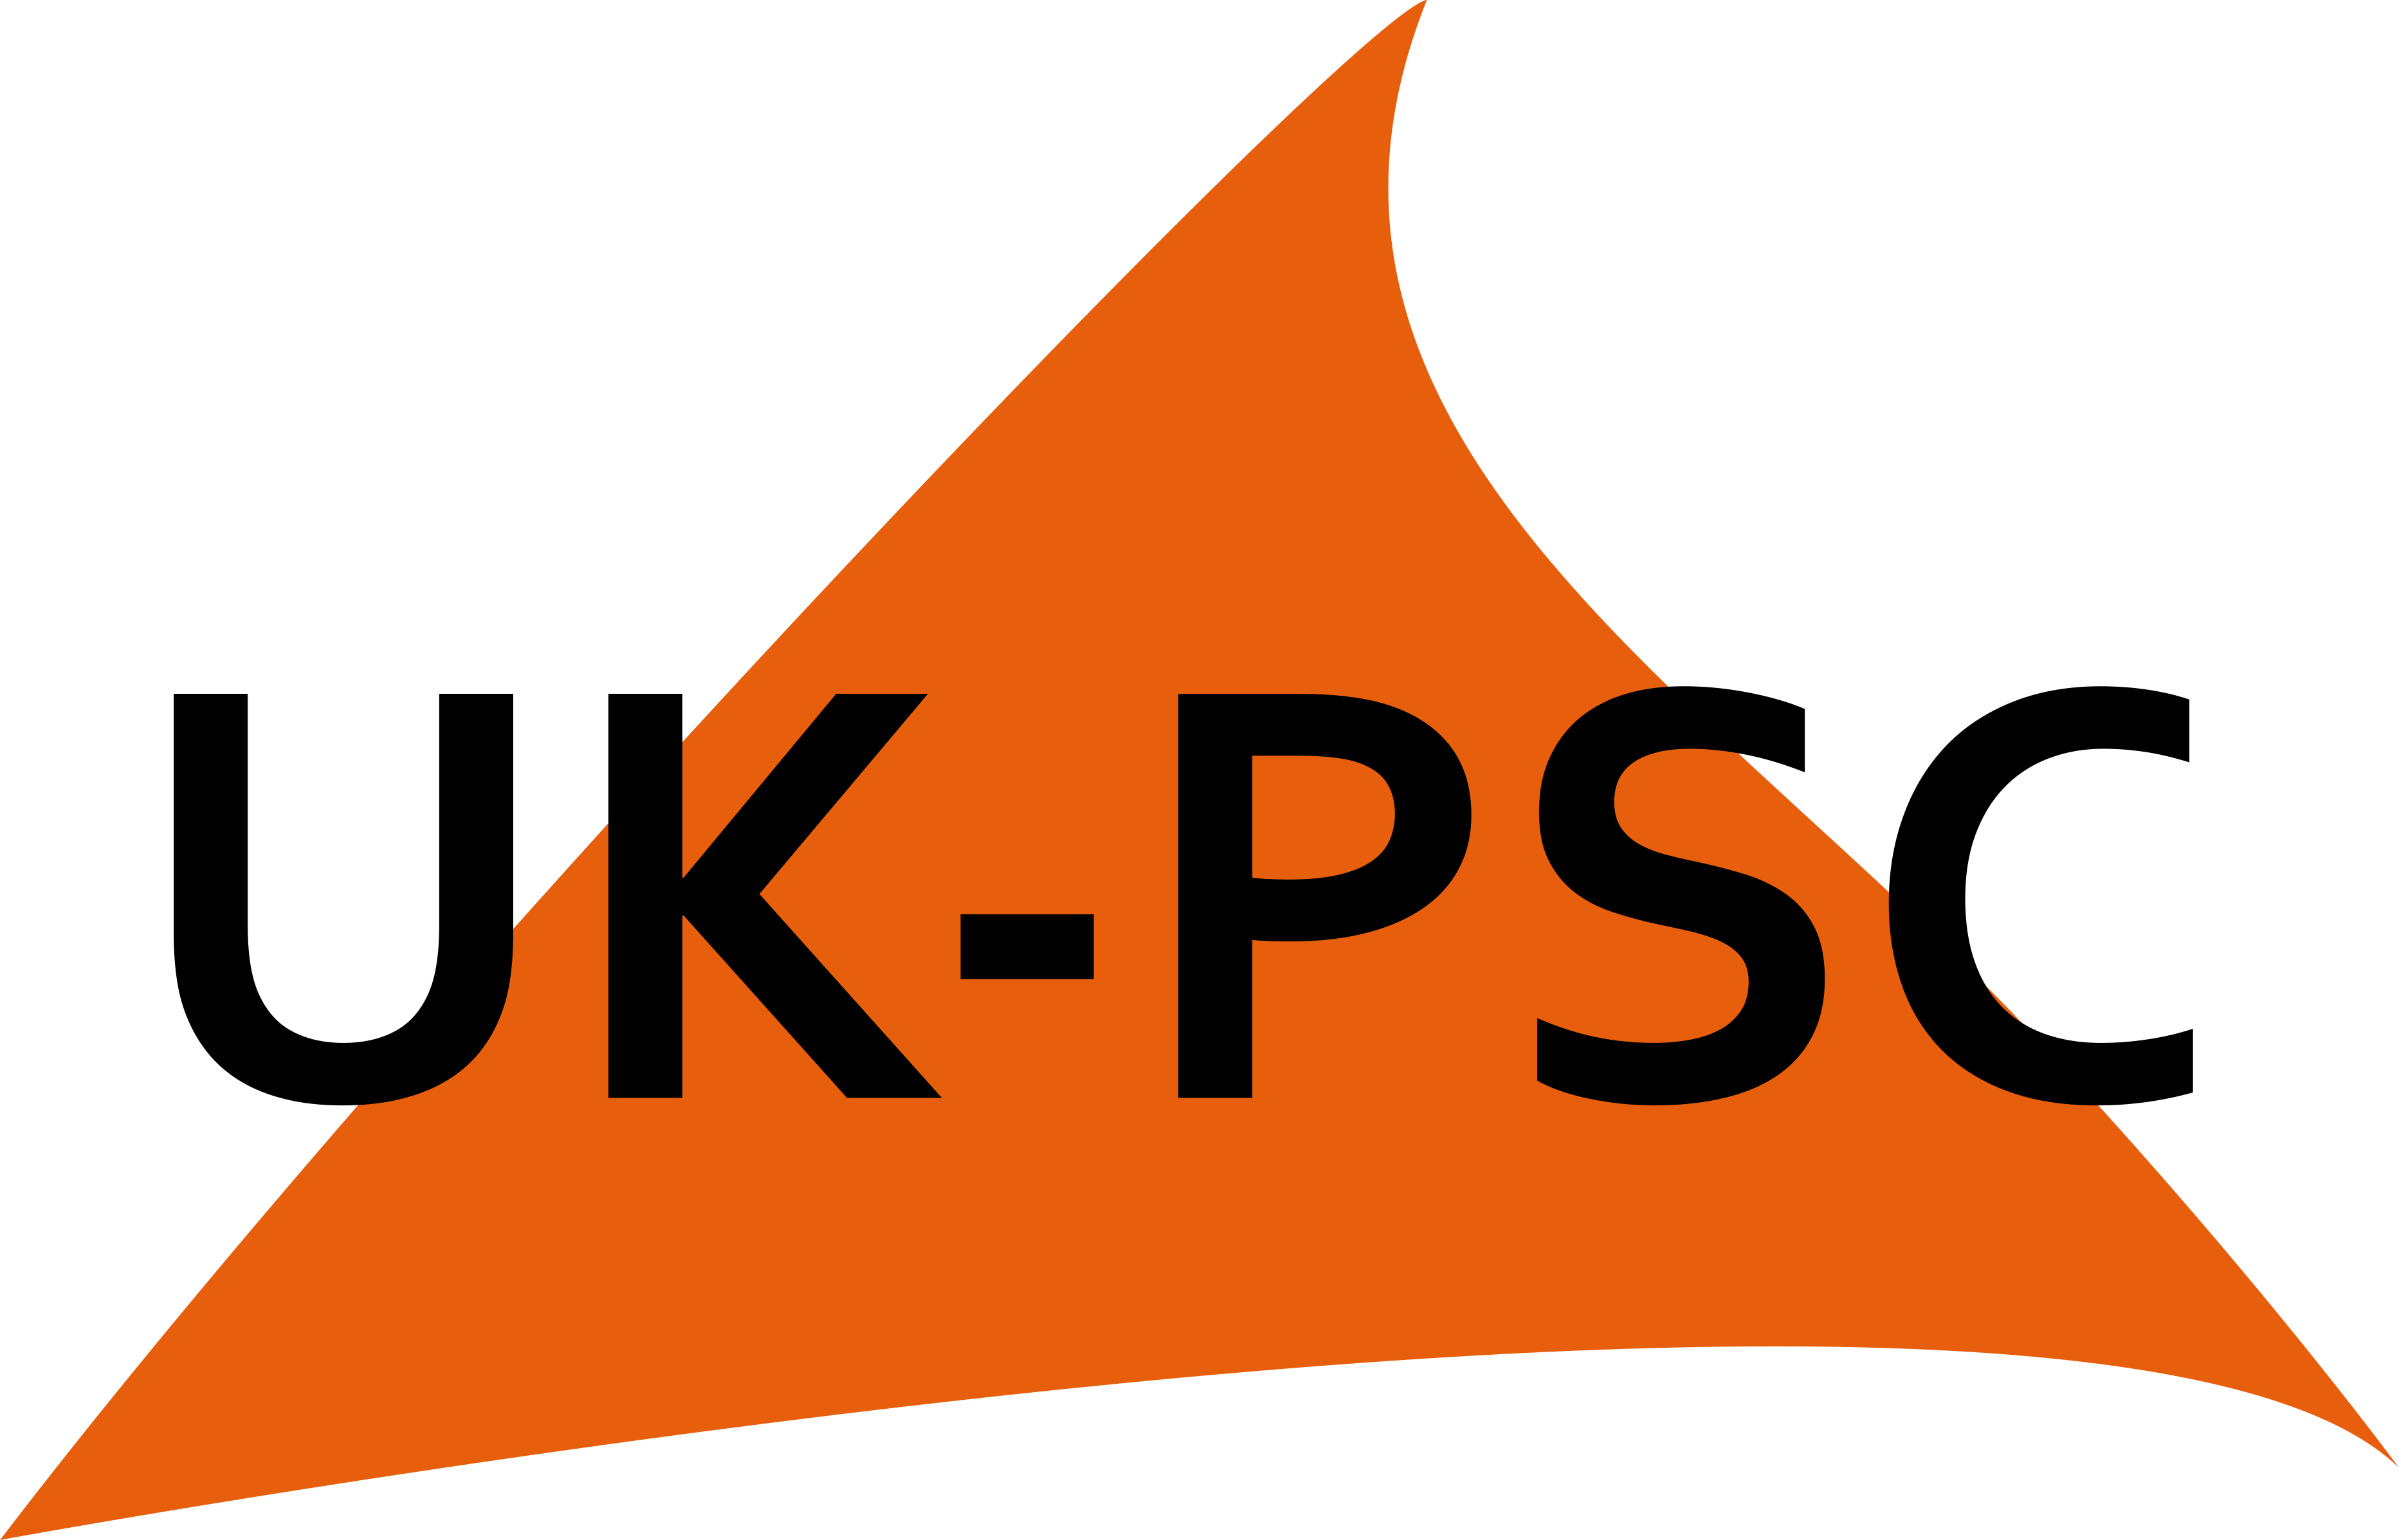 UK-PSC logo